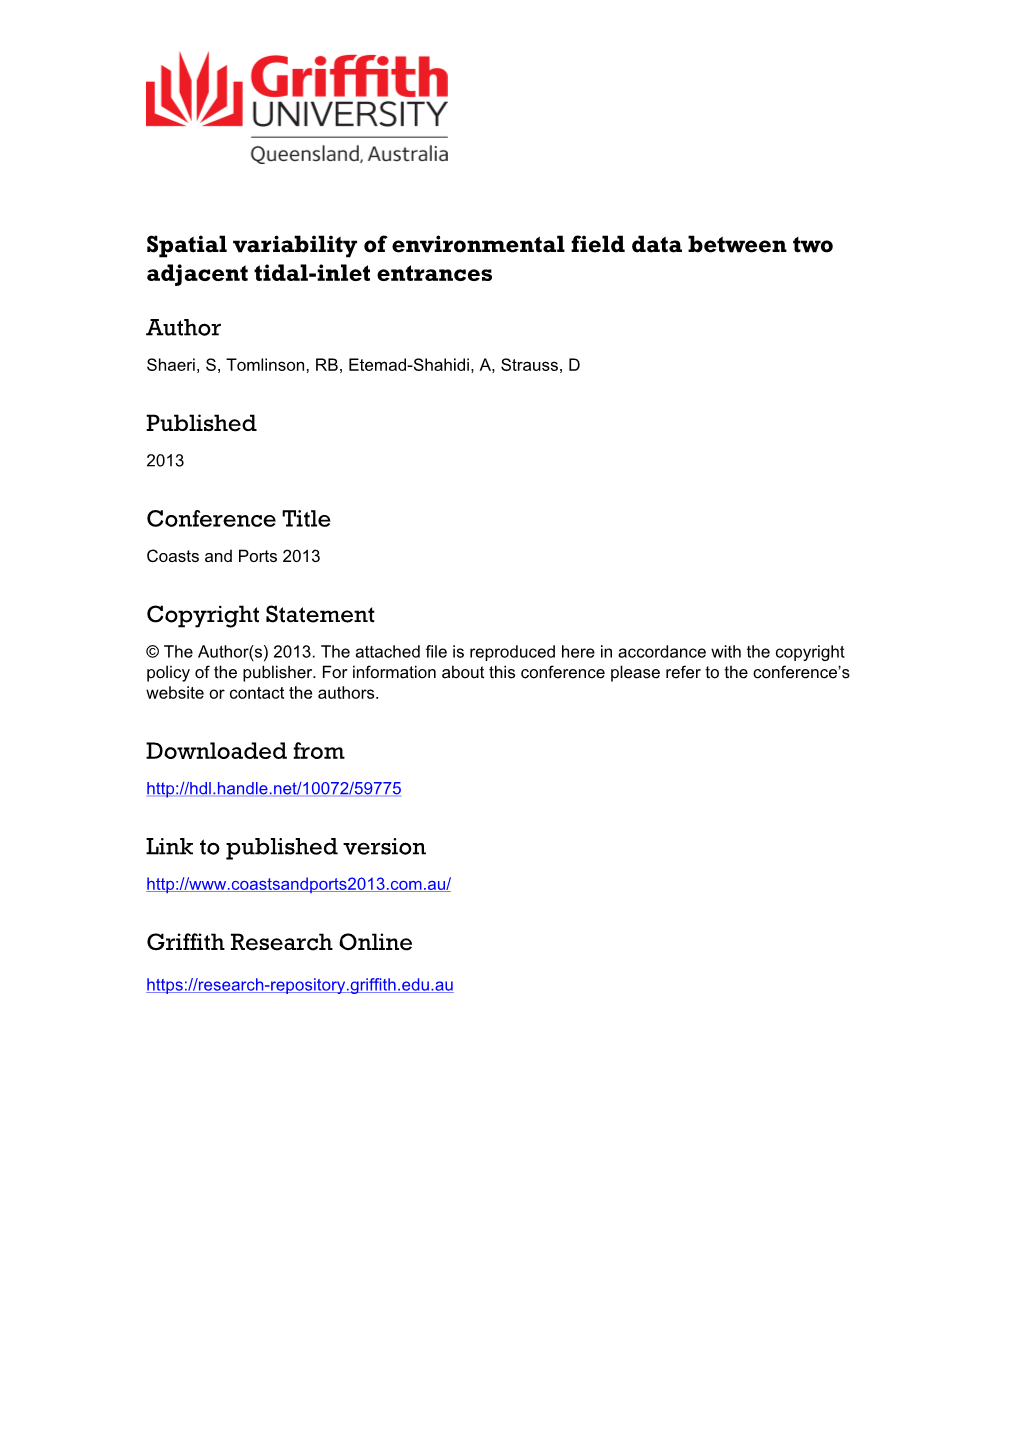 Spatial Variability of Environmental Field Data Between Two Adjacent Tidal-Inlet Entrances